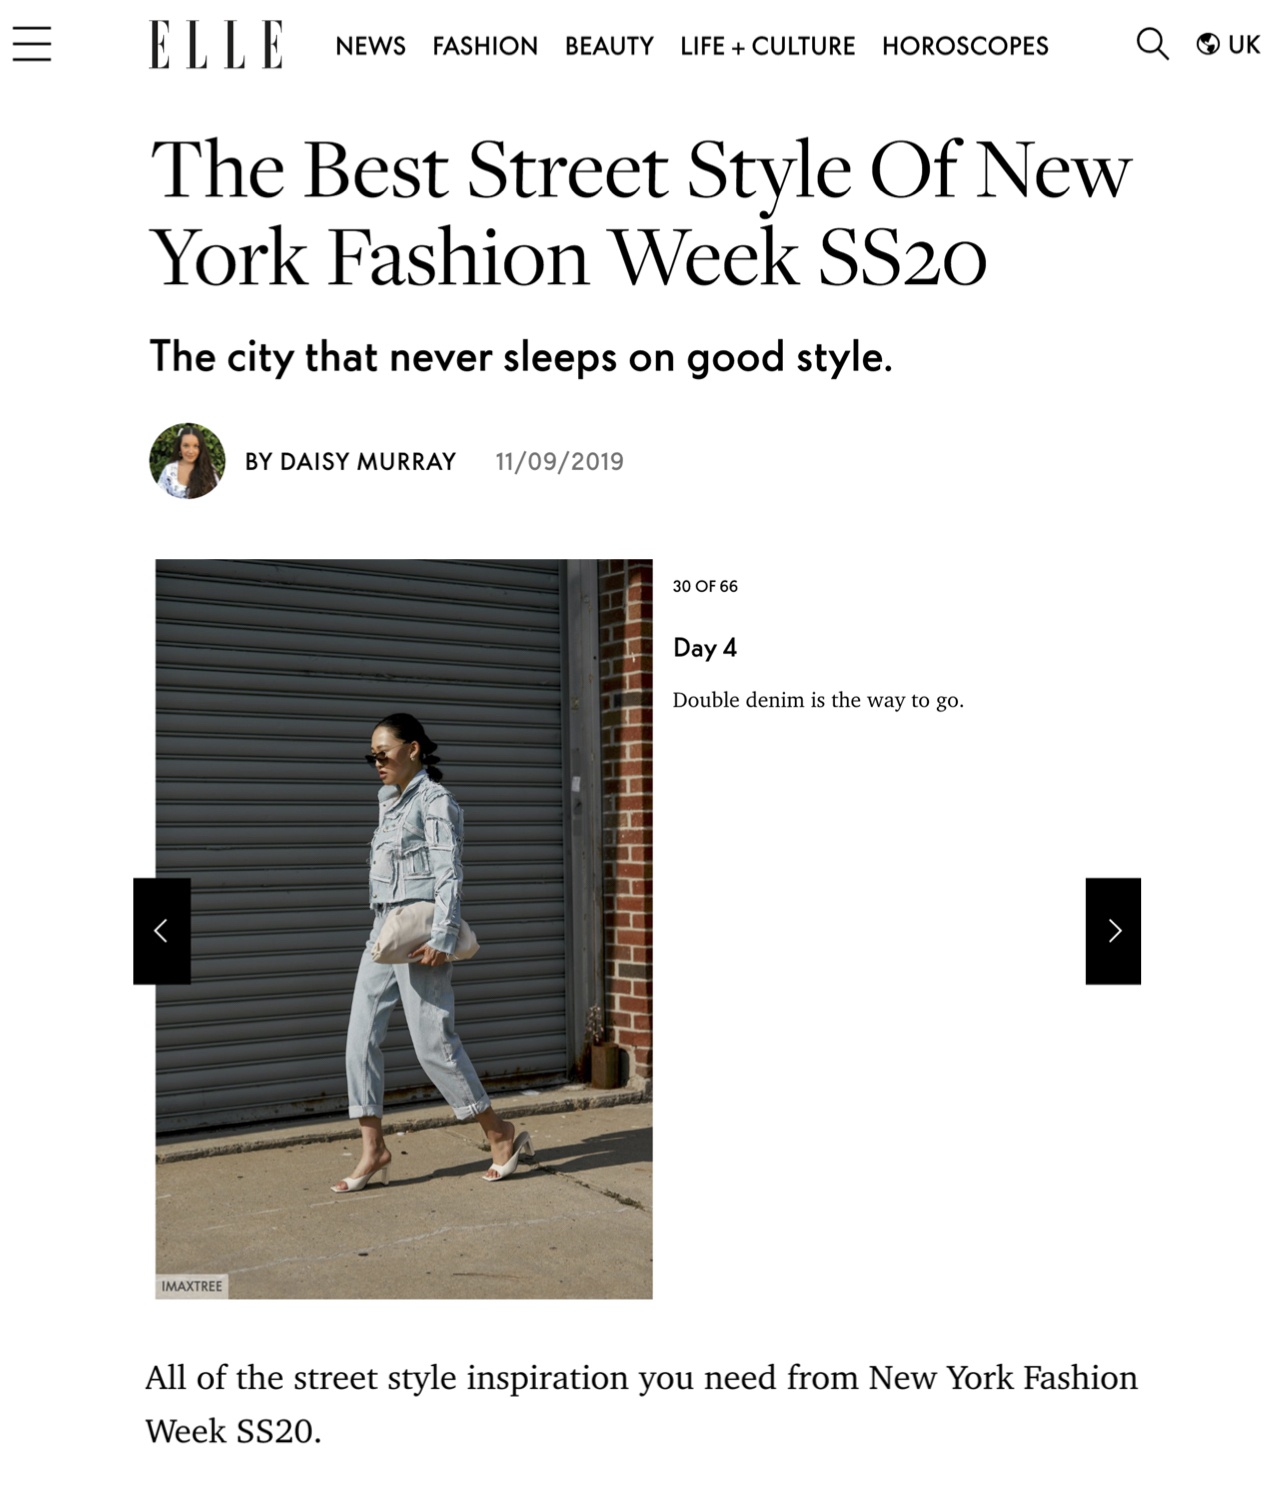 Elle UK: The Best Street Style of New York Fashion Week SS20